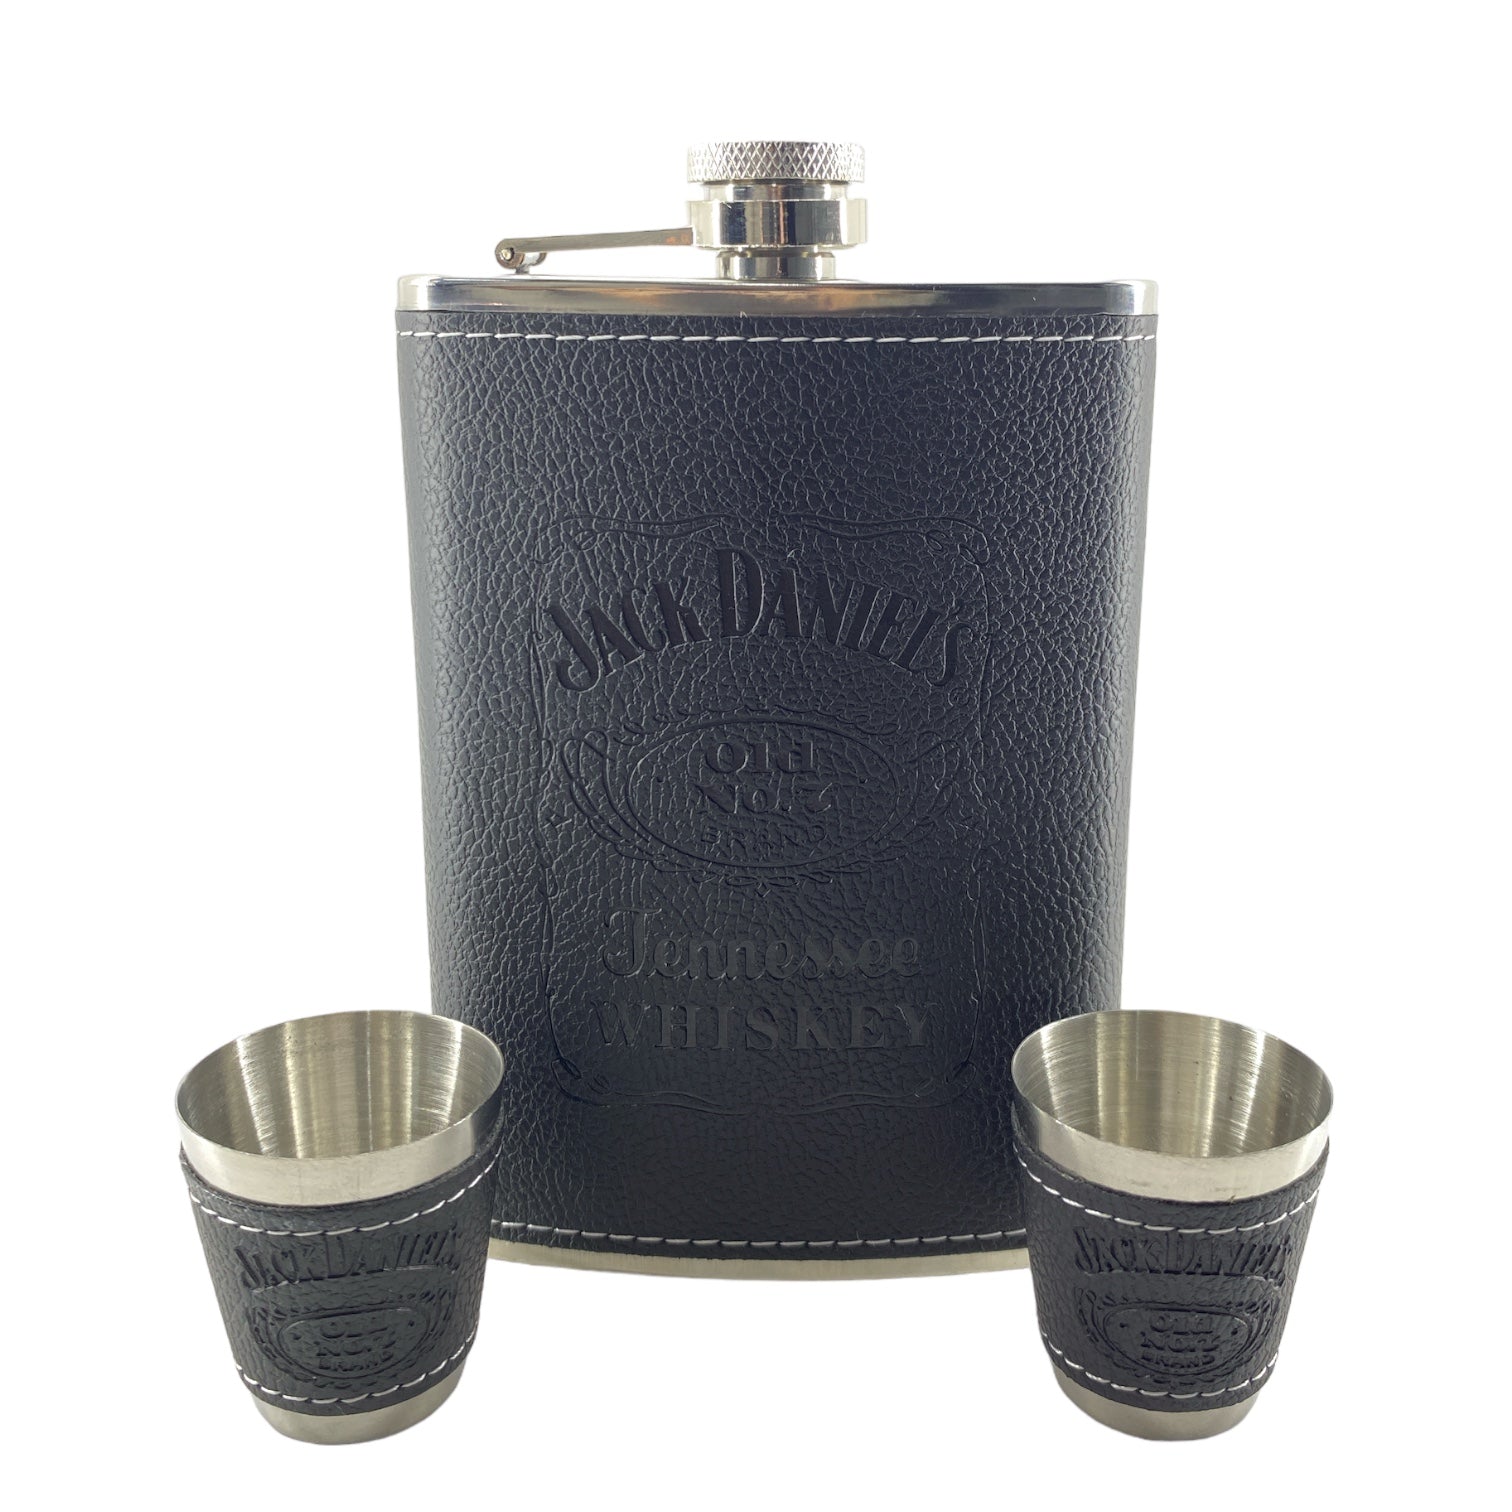 Whiskera Jack Daniel's cuero negra + 2 copas VIC-74